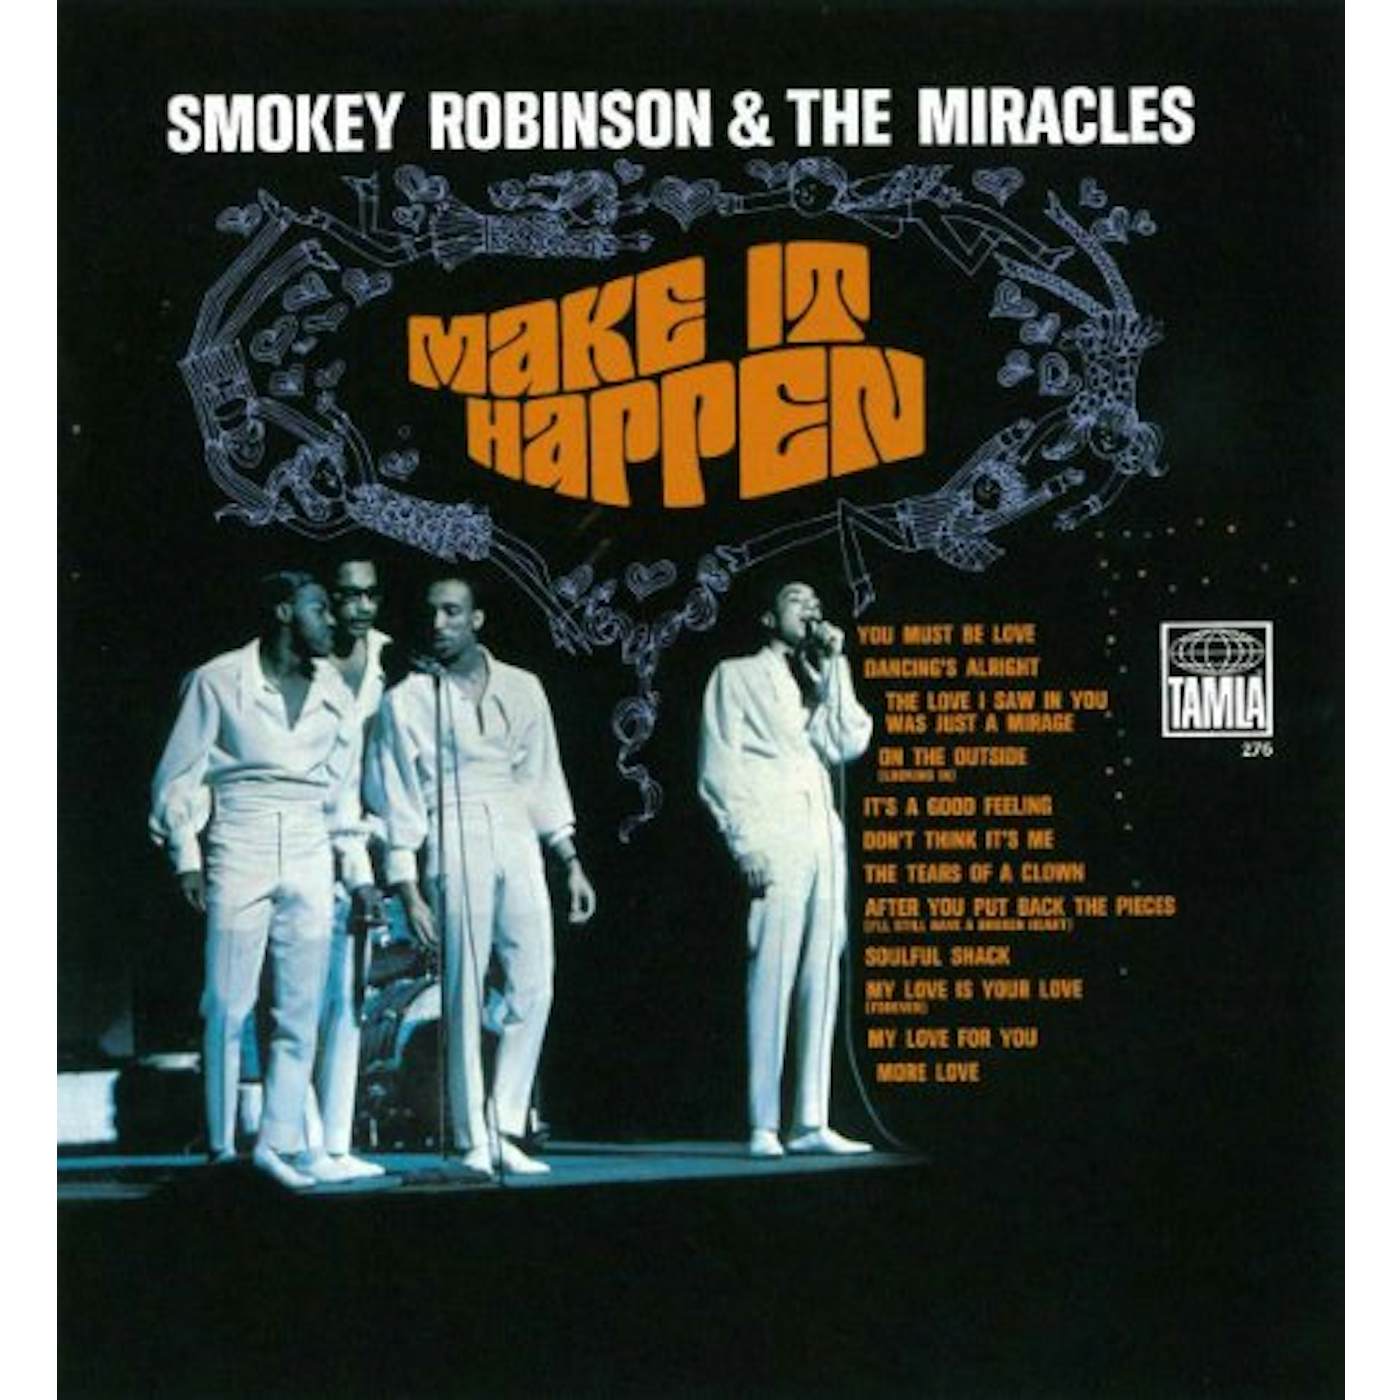 Smokey Robinson & The Miracles MAKE IT HAPPEN AKA TEARS OF A CROWN CD